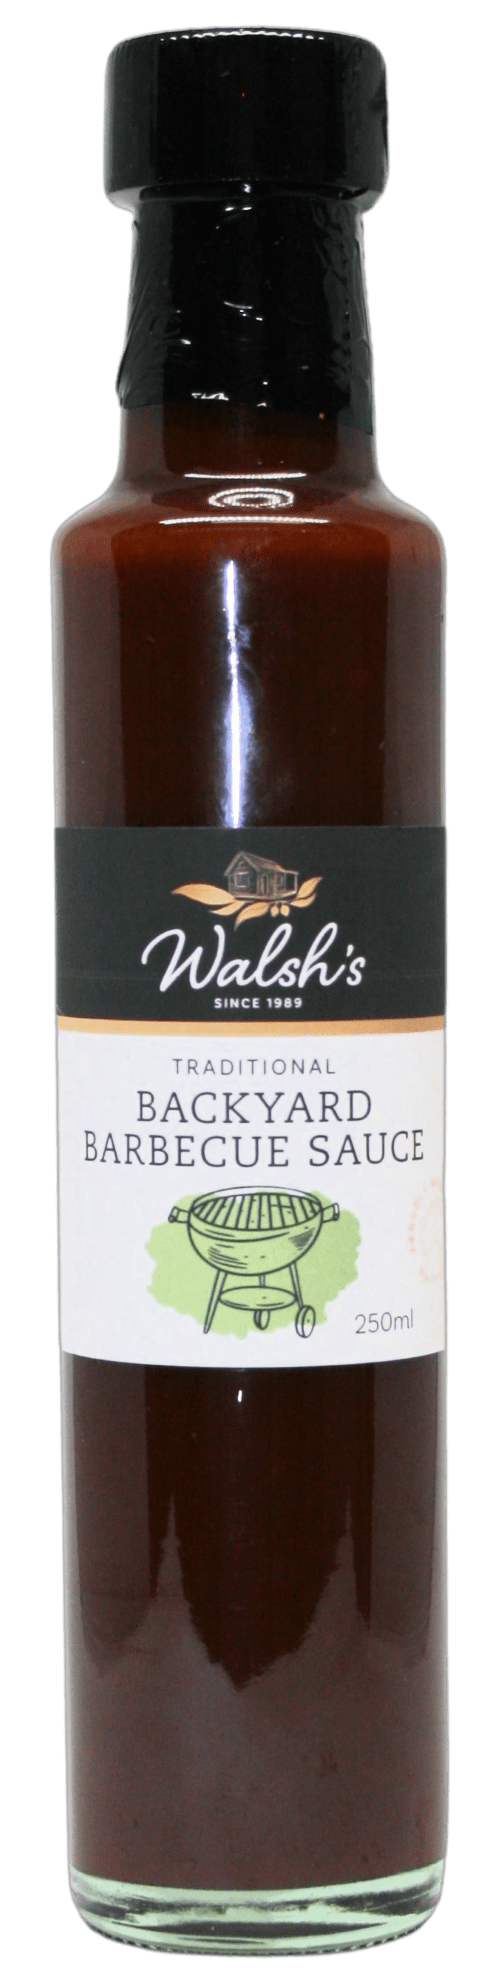 Walshs Backyard Barbecue Sauce